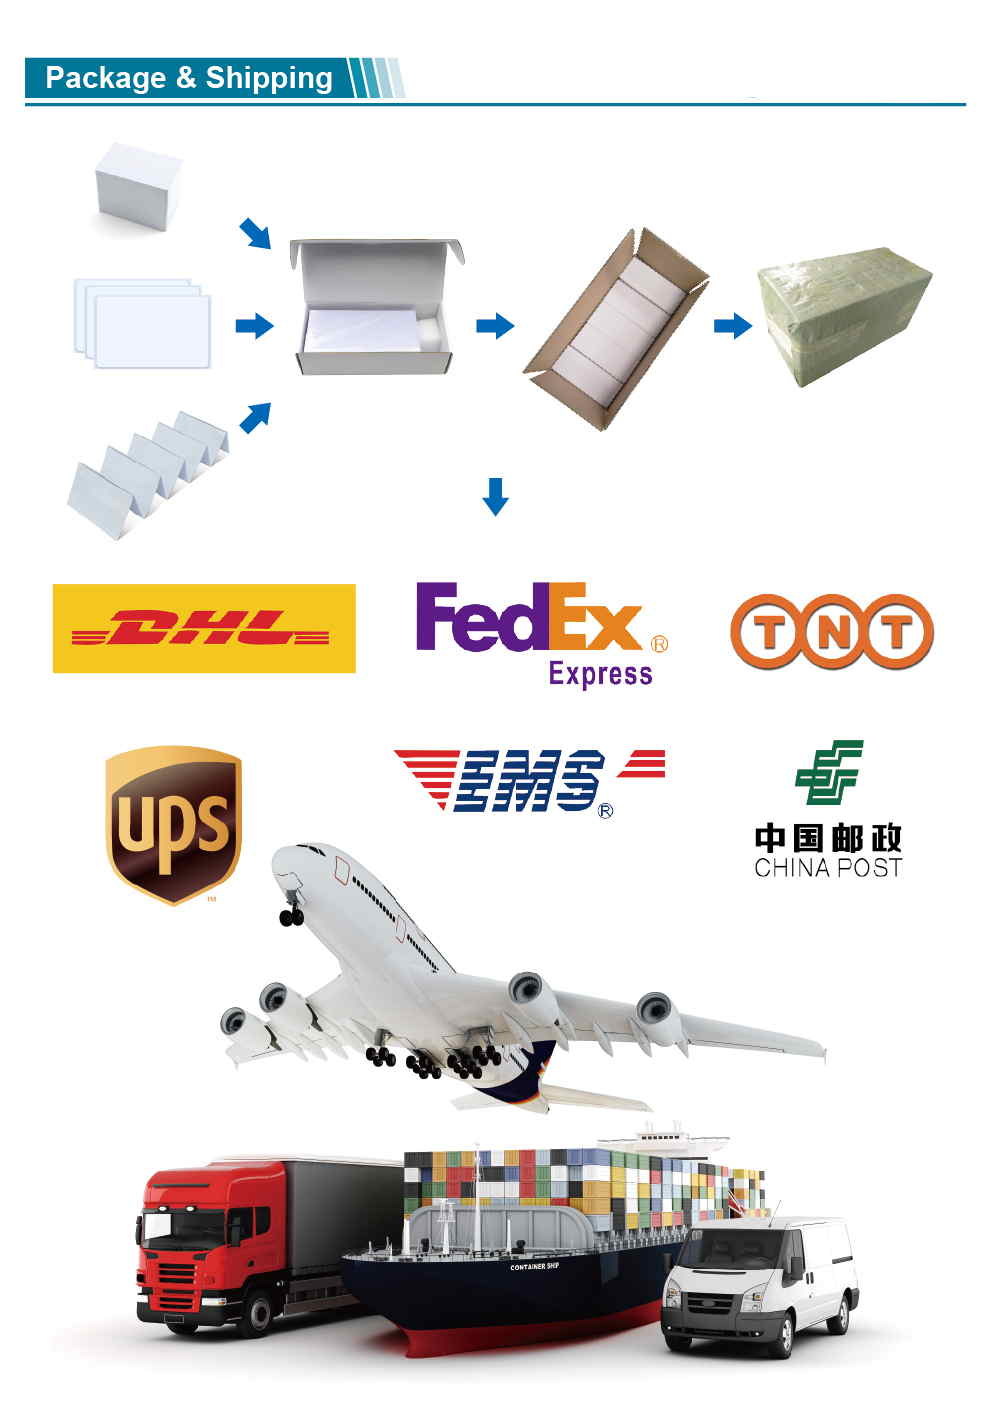 Printable SEL 5542 ,5528 Contact IC Card China Factory